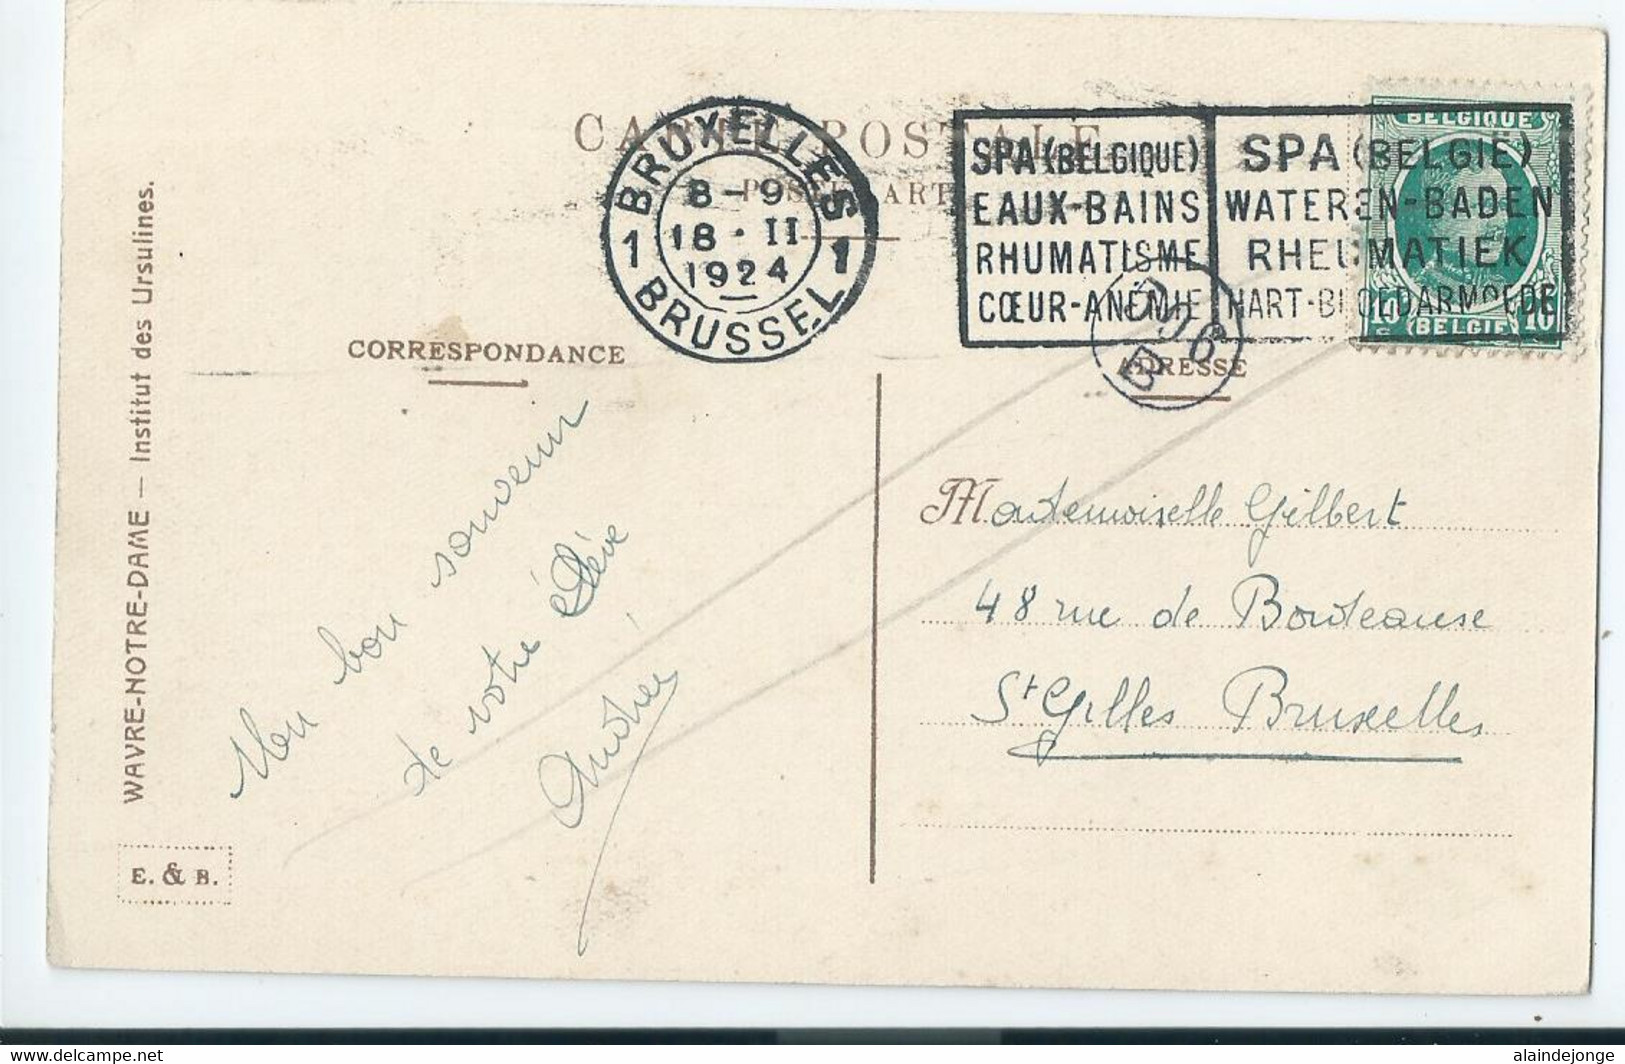 Wavre-Notre-Dame - Onze-Lieve-Vrouw-Waver - Institut Des Ursulines - Un Coin Du Parc - 1924 - Sint-Katelijne-Waver